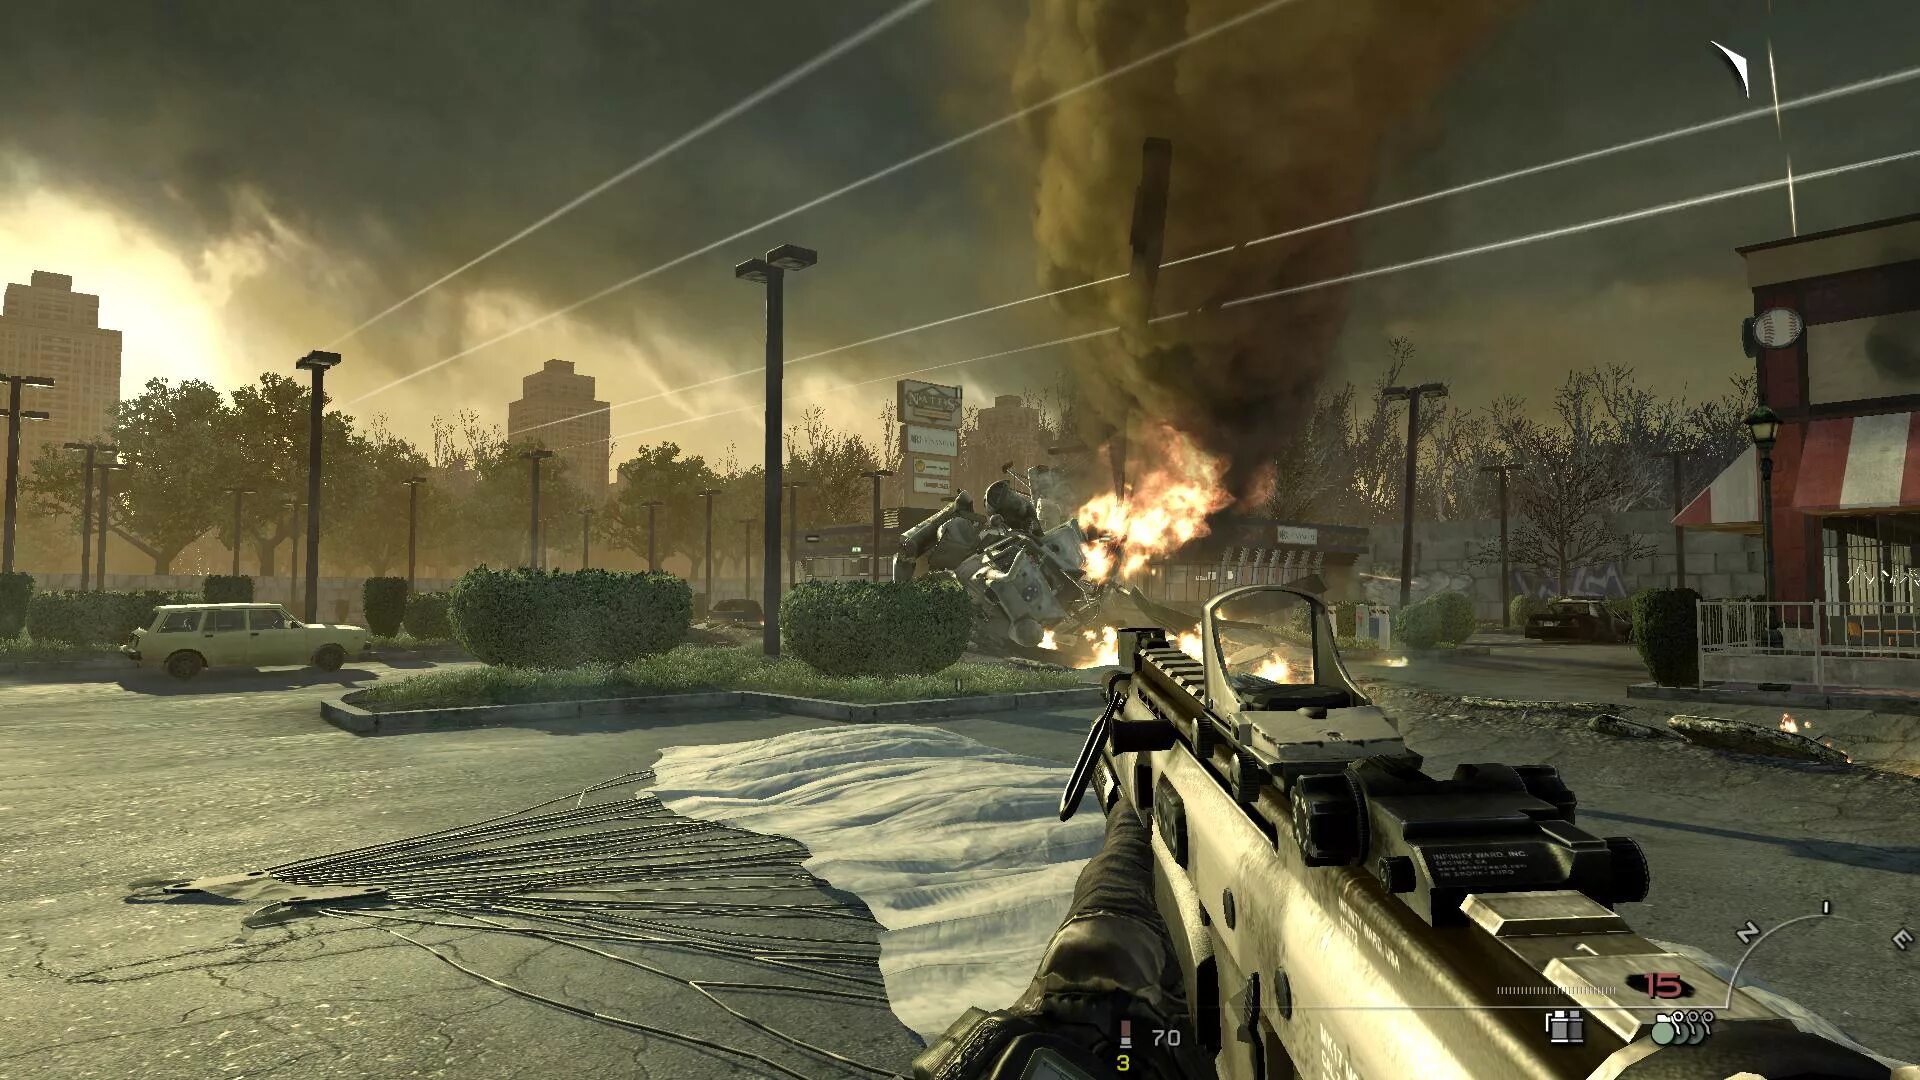 Modern Warfare 2. Call of Duty: Modern Warfare 2. Call of Duty 2 Modern Warfare 2. Call of Duty Modern Warfare 2 геймплей. Игра от механиков калов дьюти